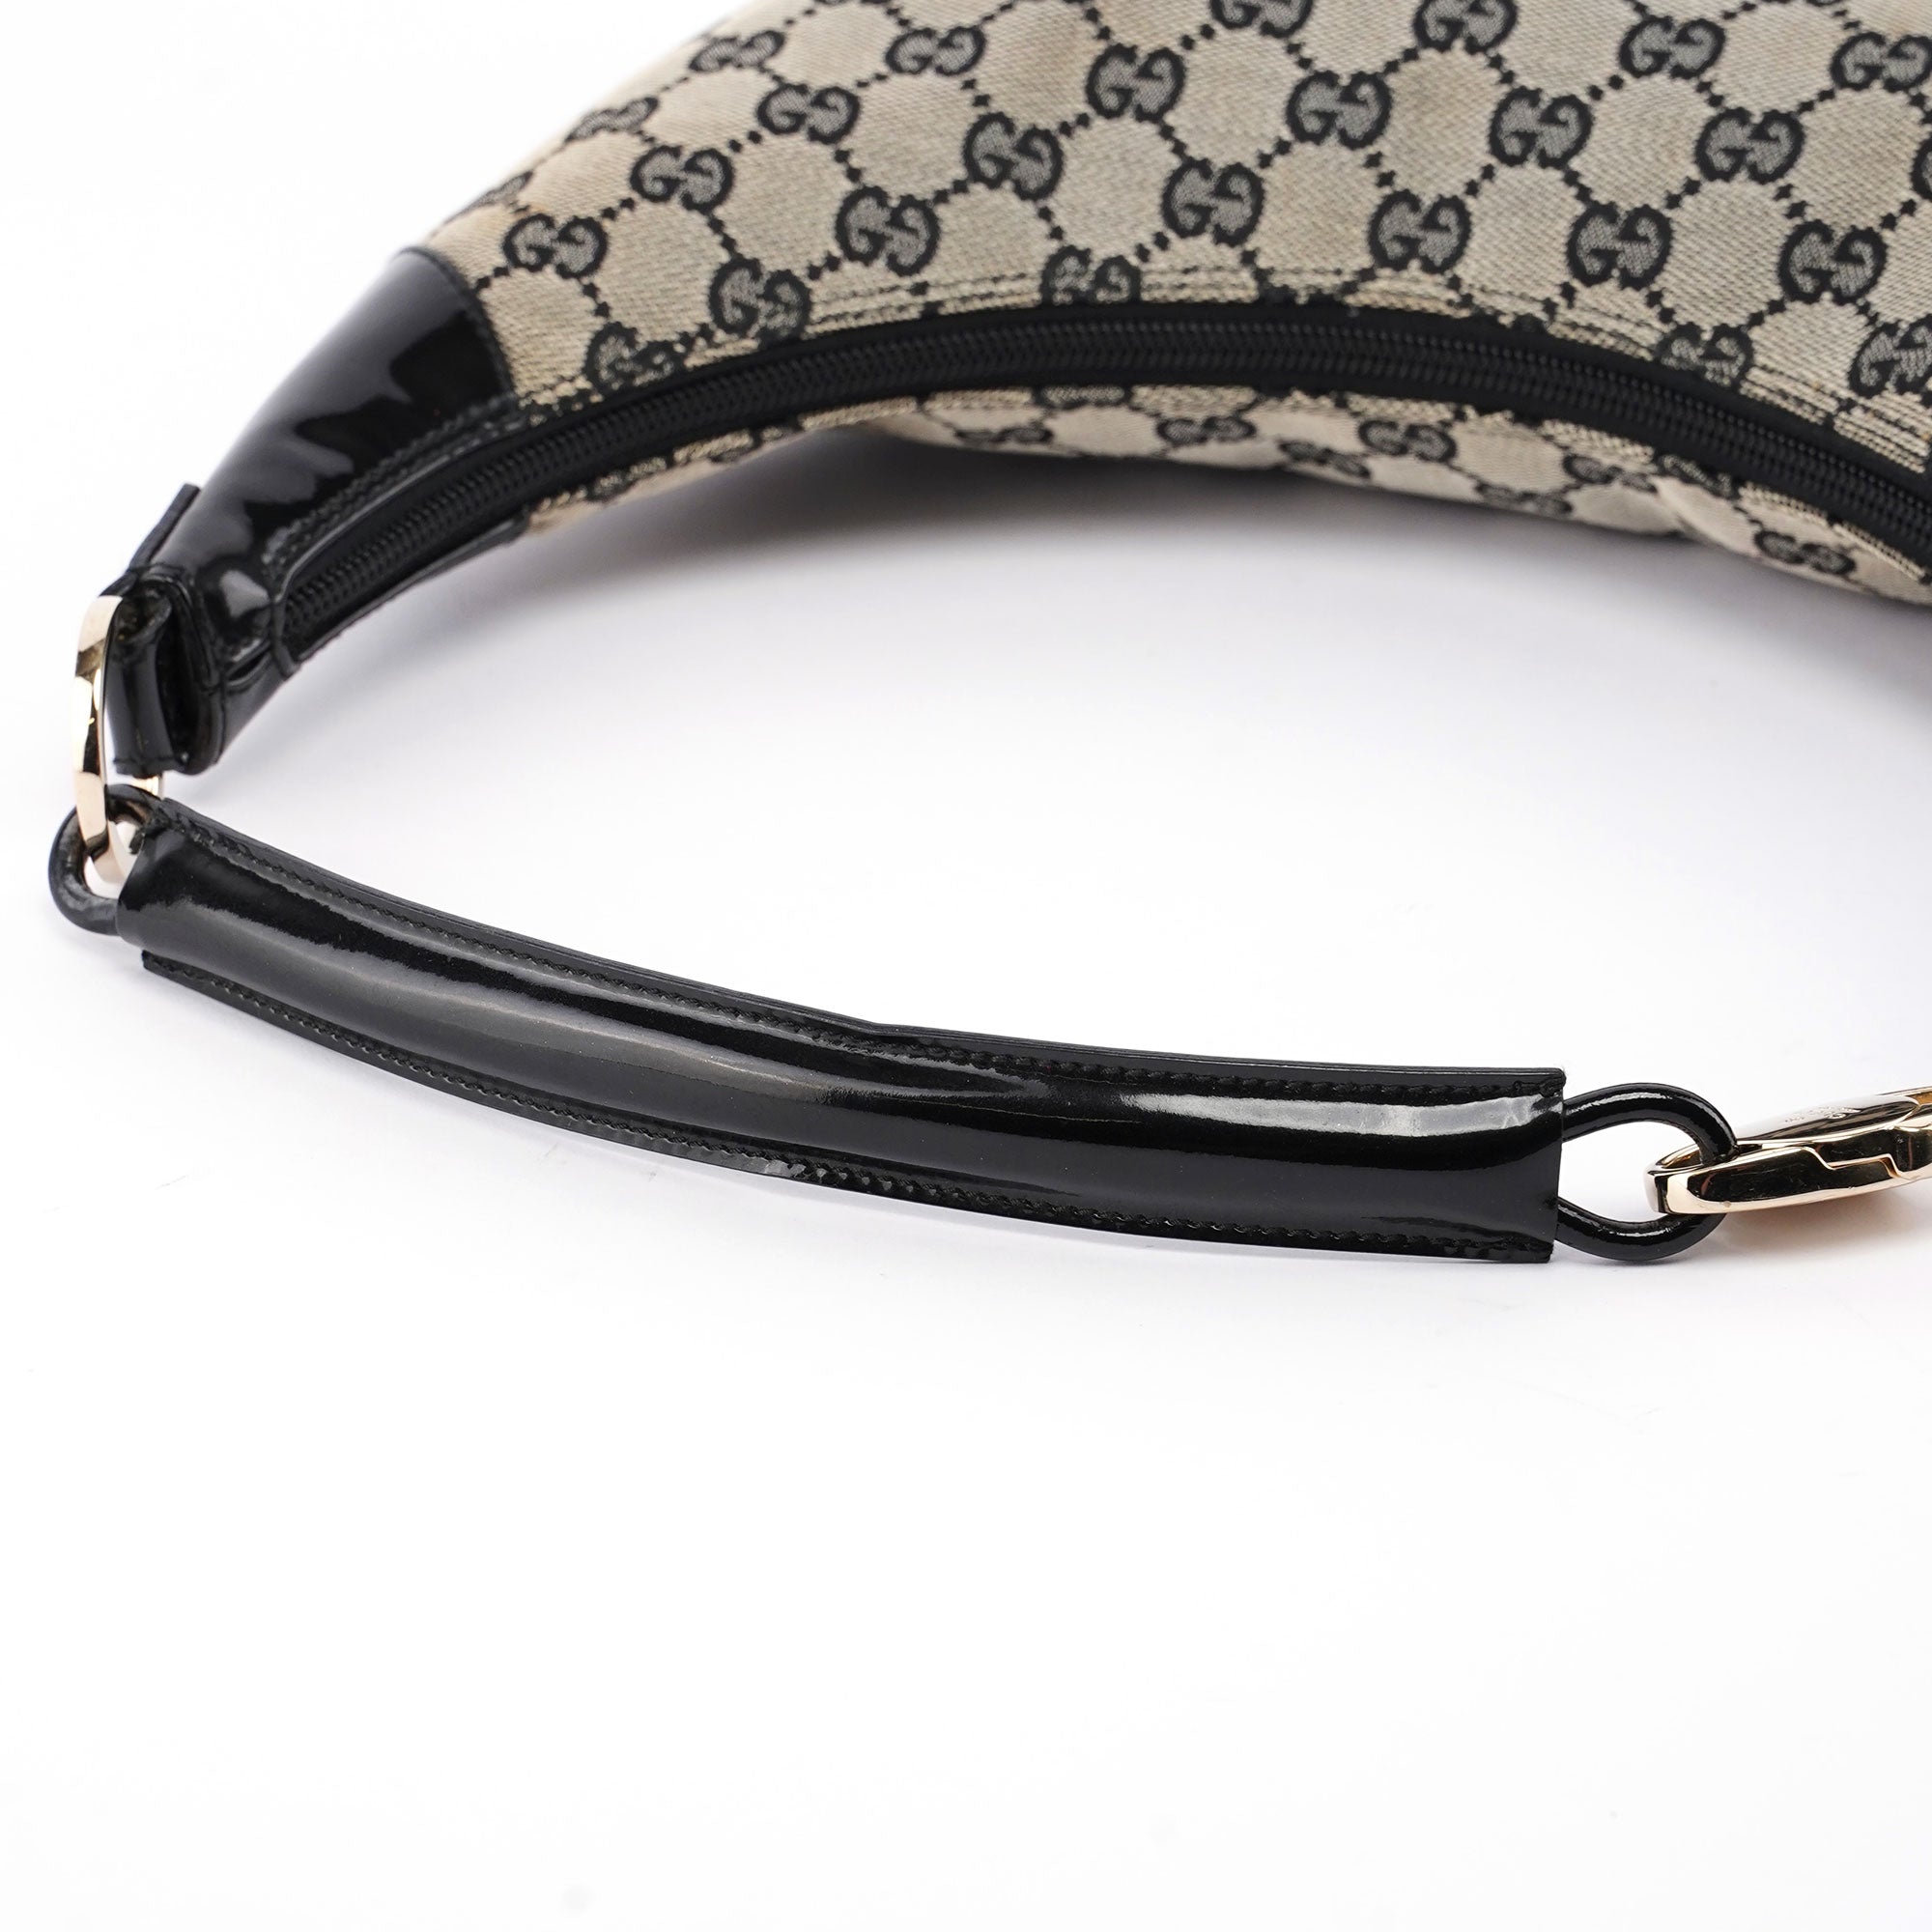 Gucci Gucci GG Beige Patent Leather